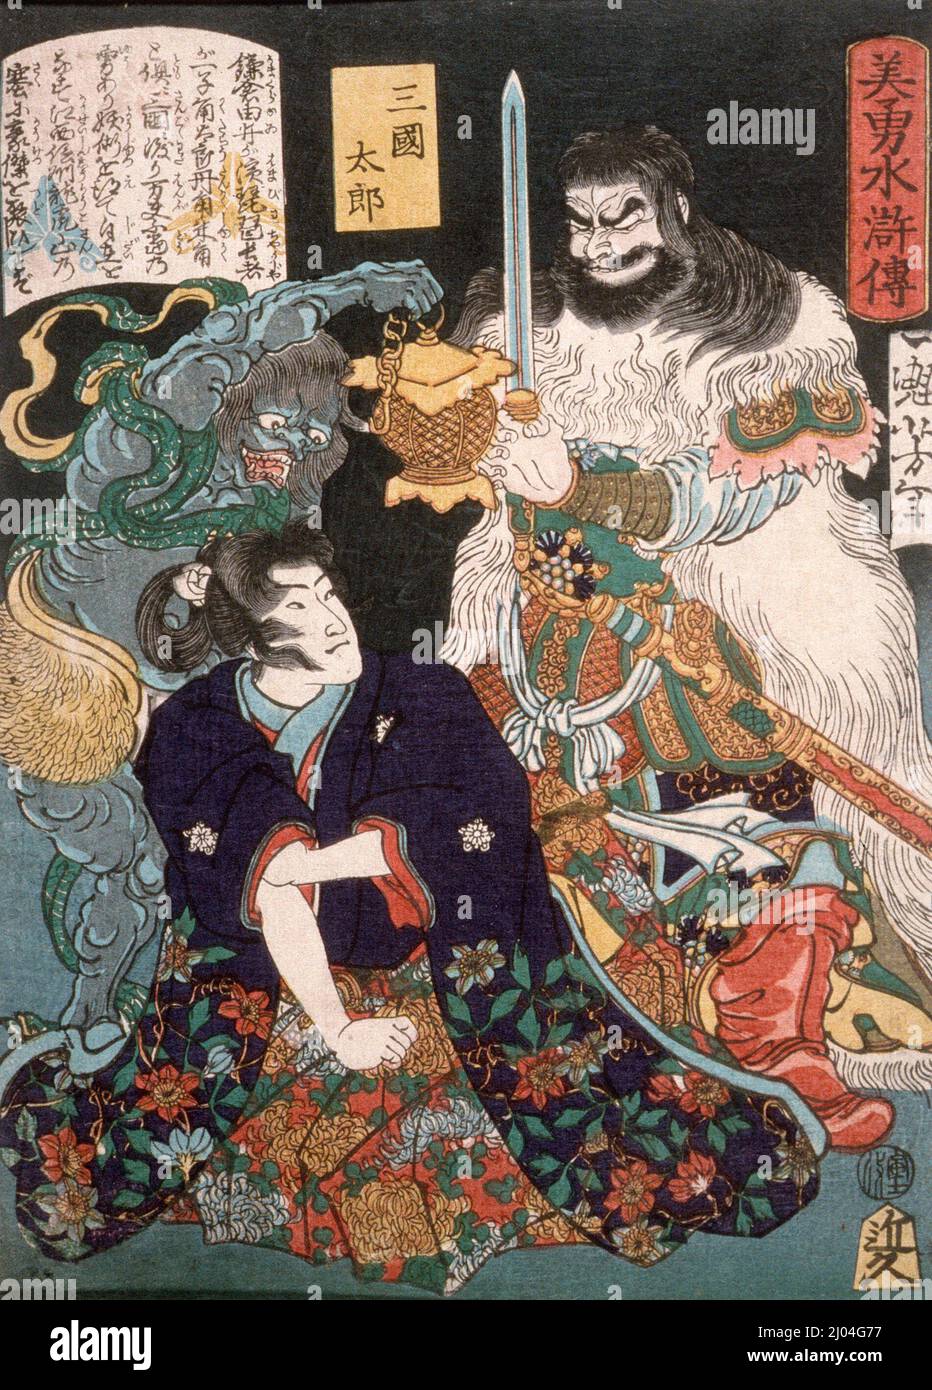 Sangoku Tarō Kneeling before Demon and Warrior. Tsukioka Yoshitoshi (Japan, 1839-1892). Japan, 1866, 11th month. Prints; woodblocks. Color woodblock print Stock Photo